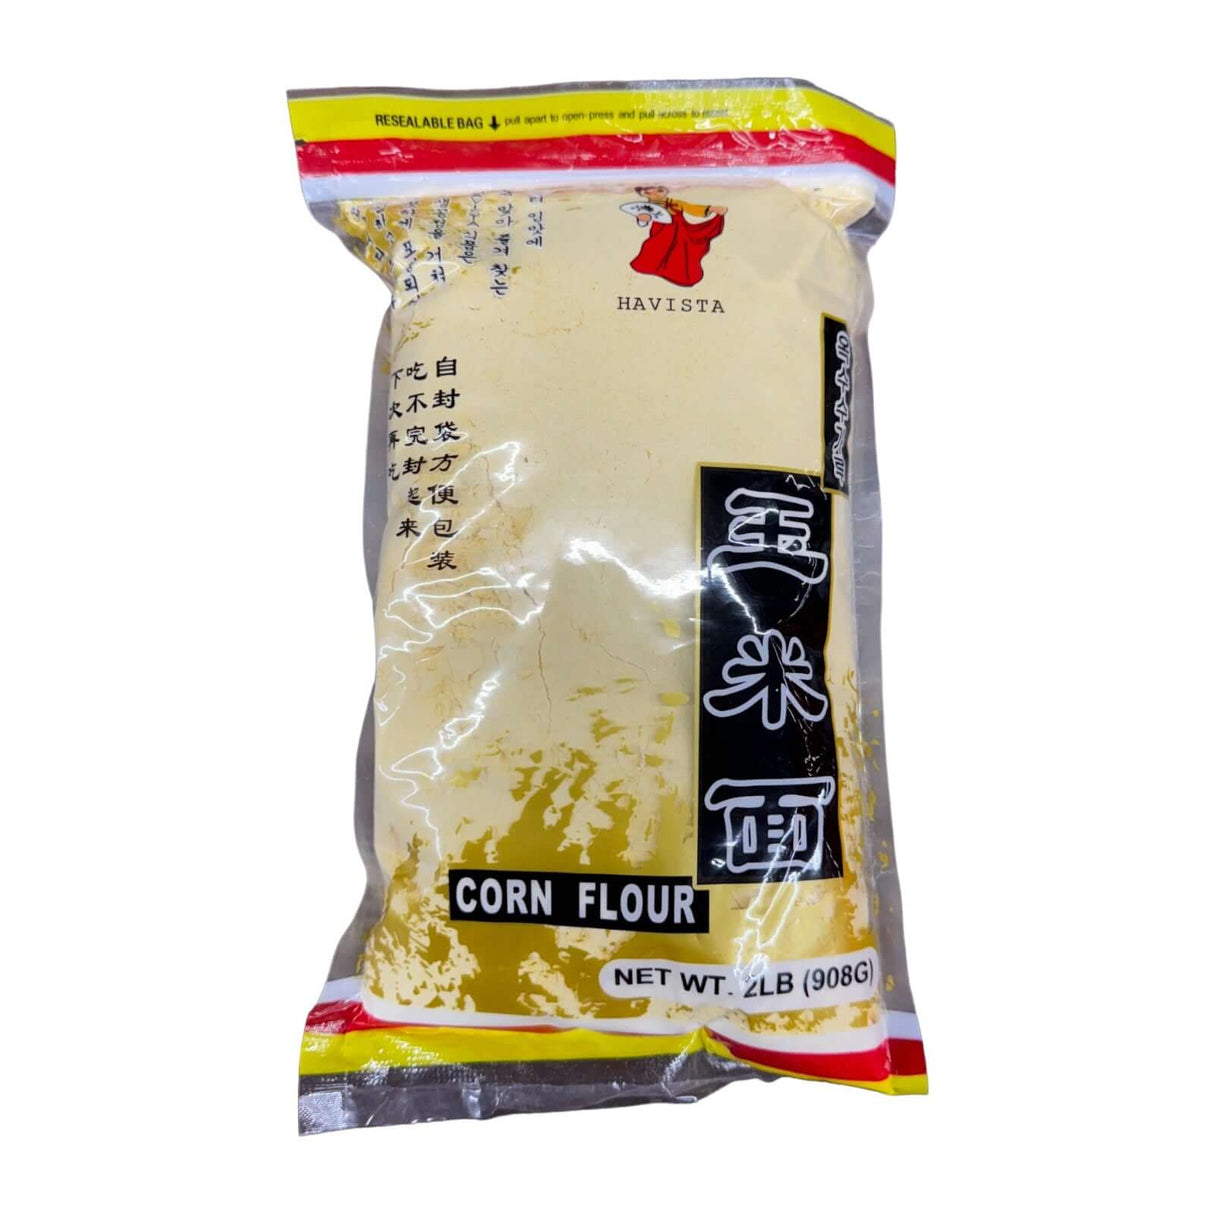 Havista Corn Flour